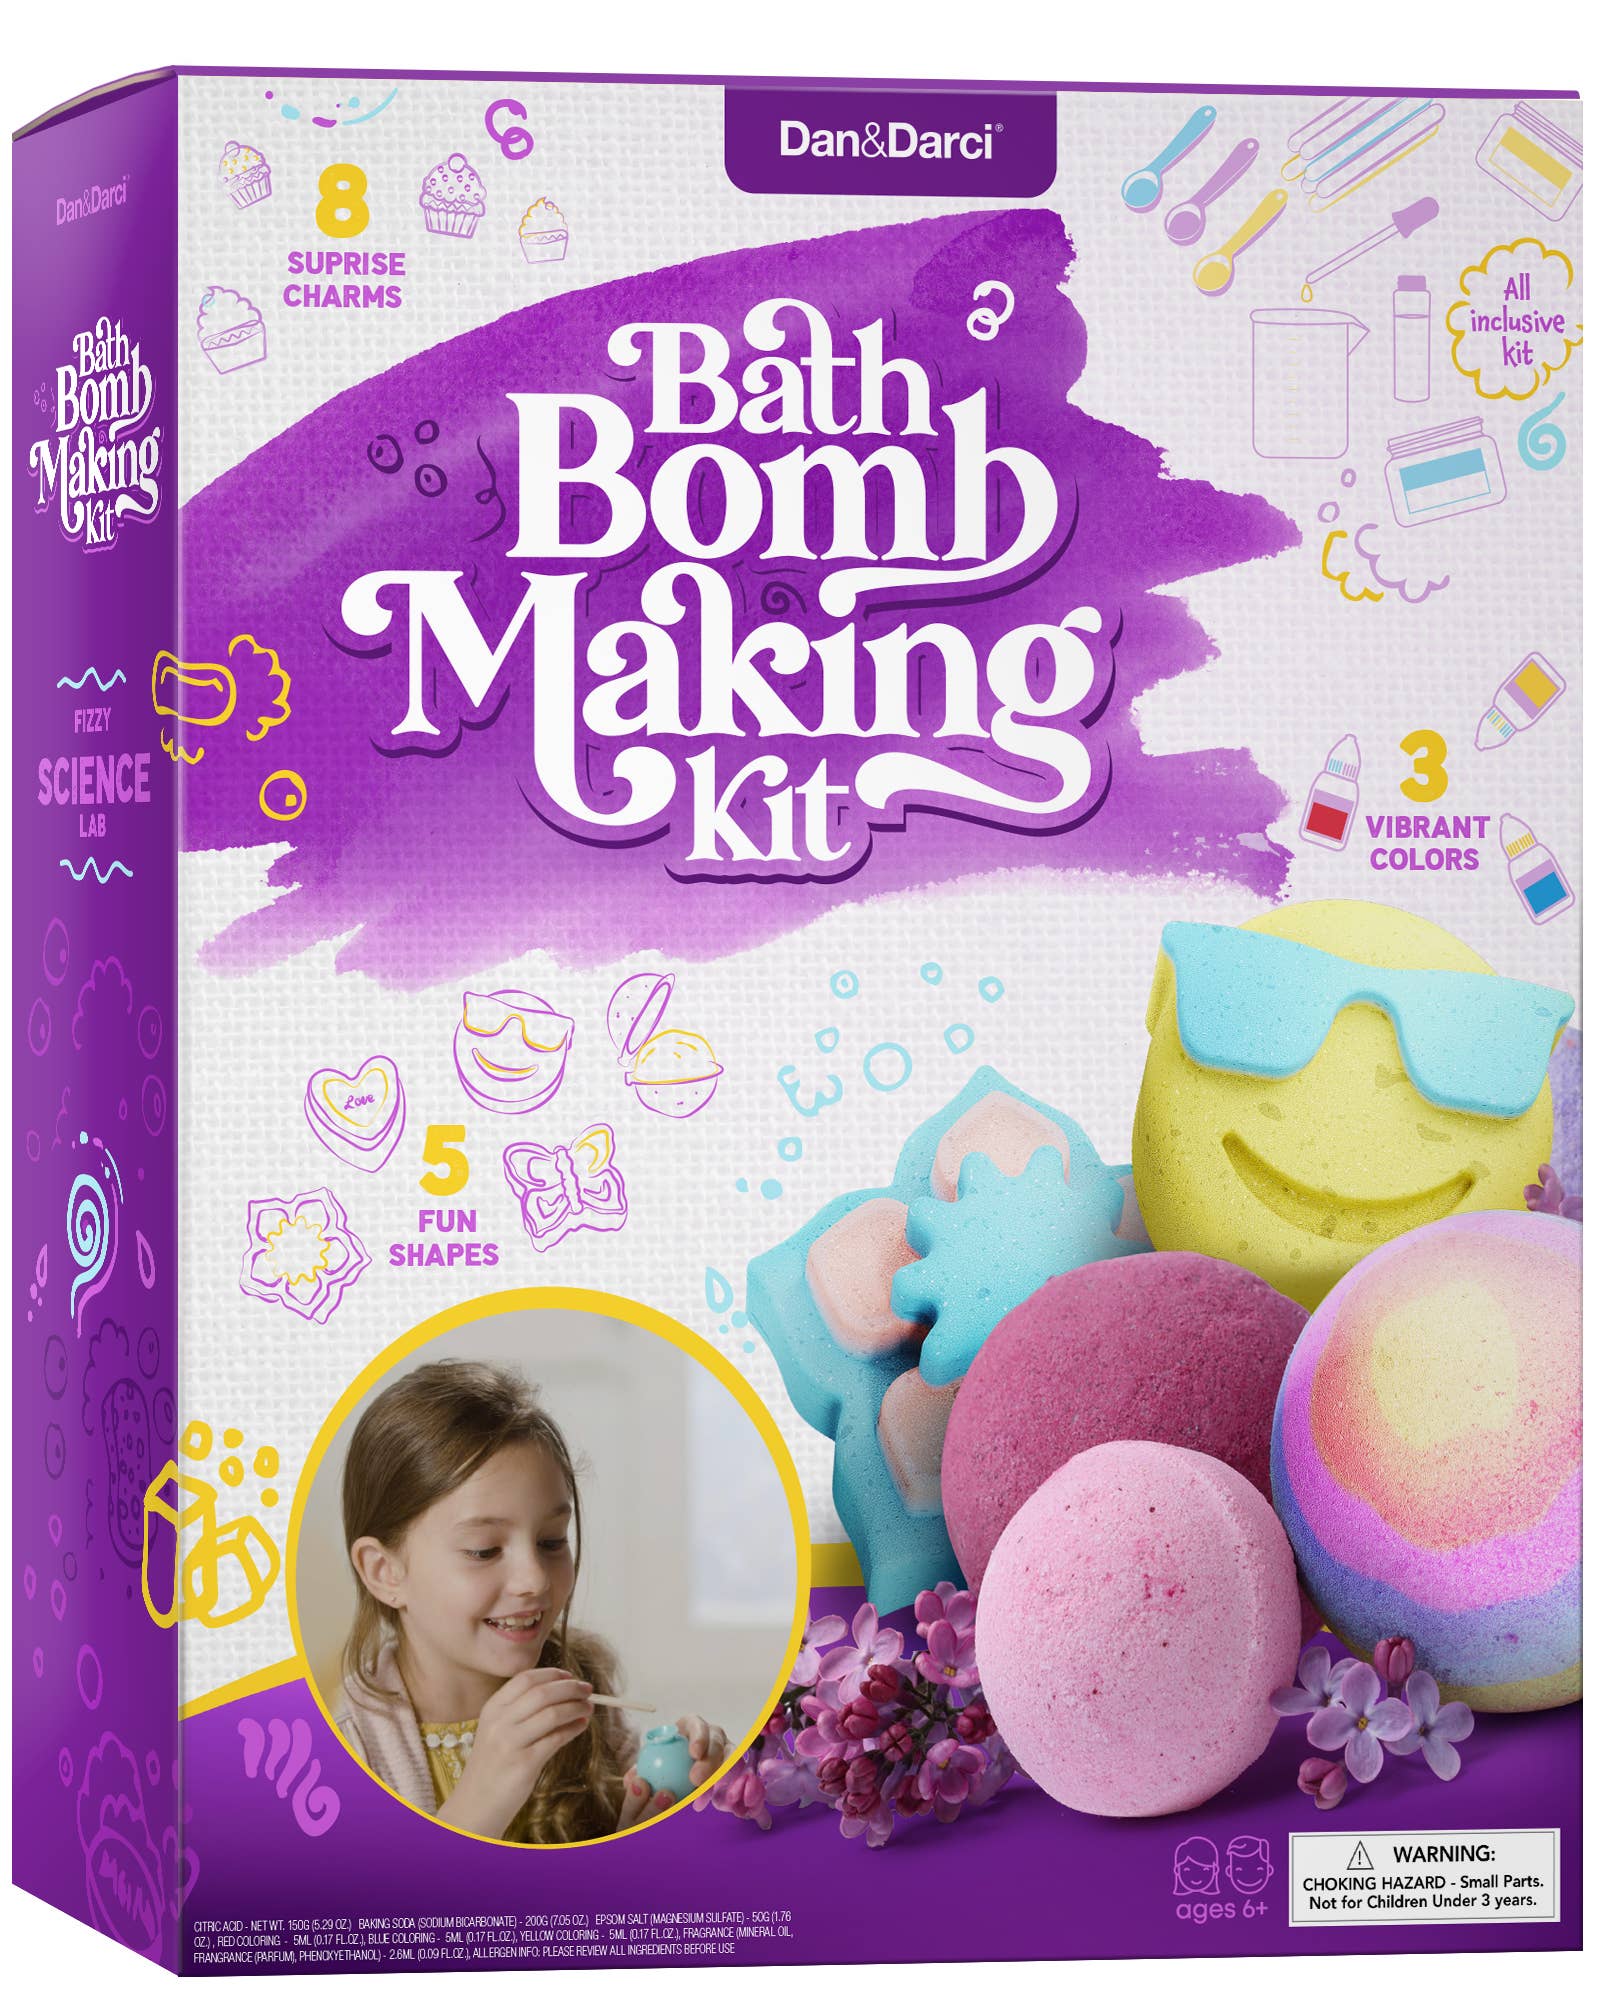 Make Your Own Bath Bombs Kit